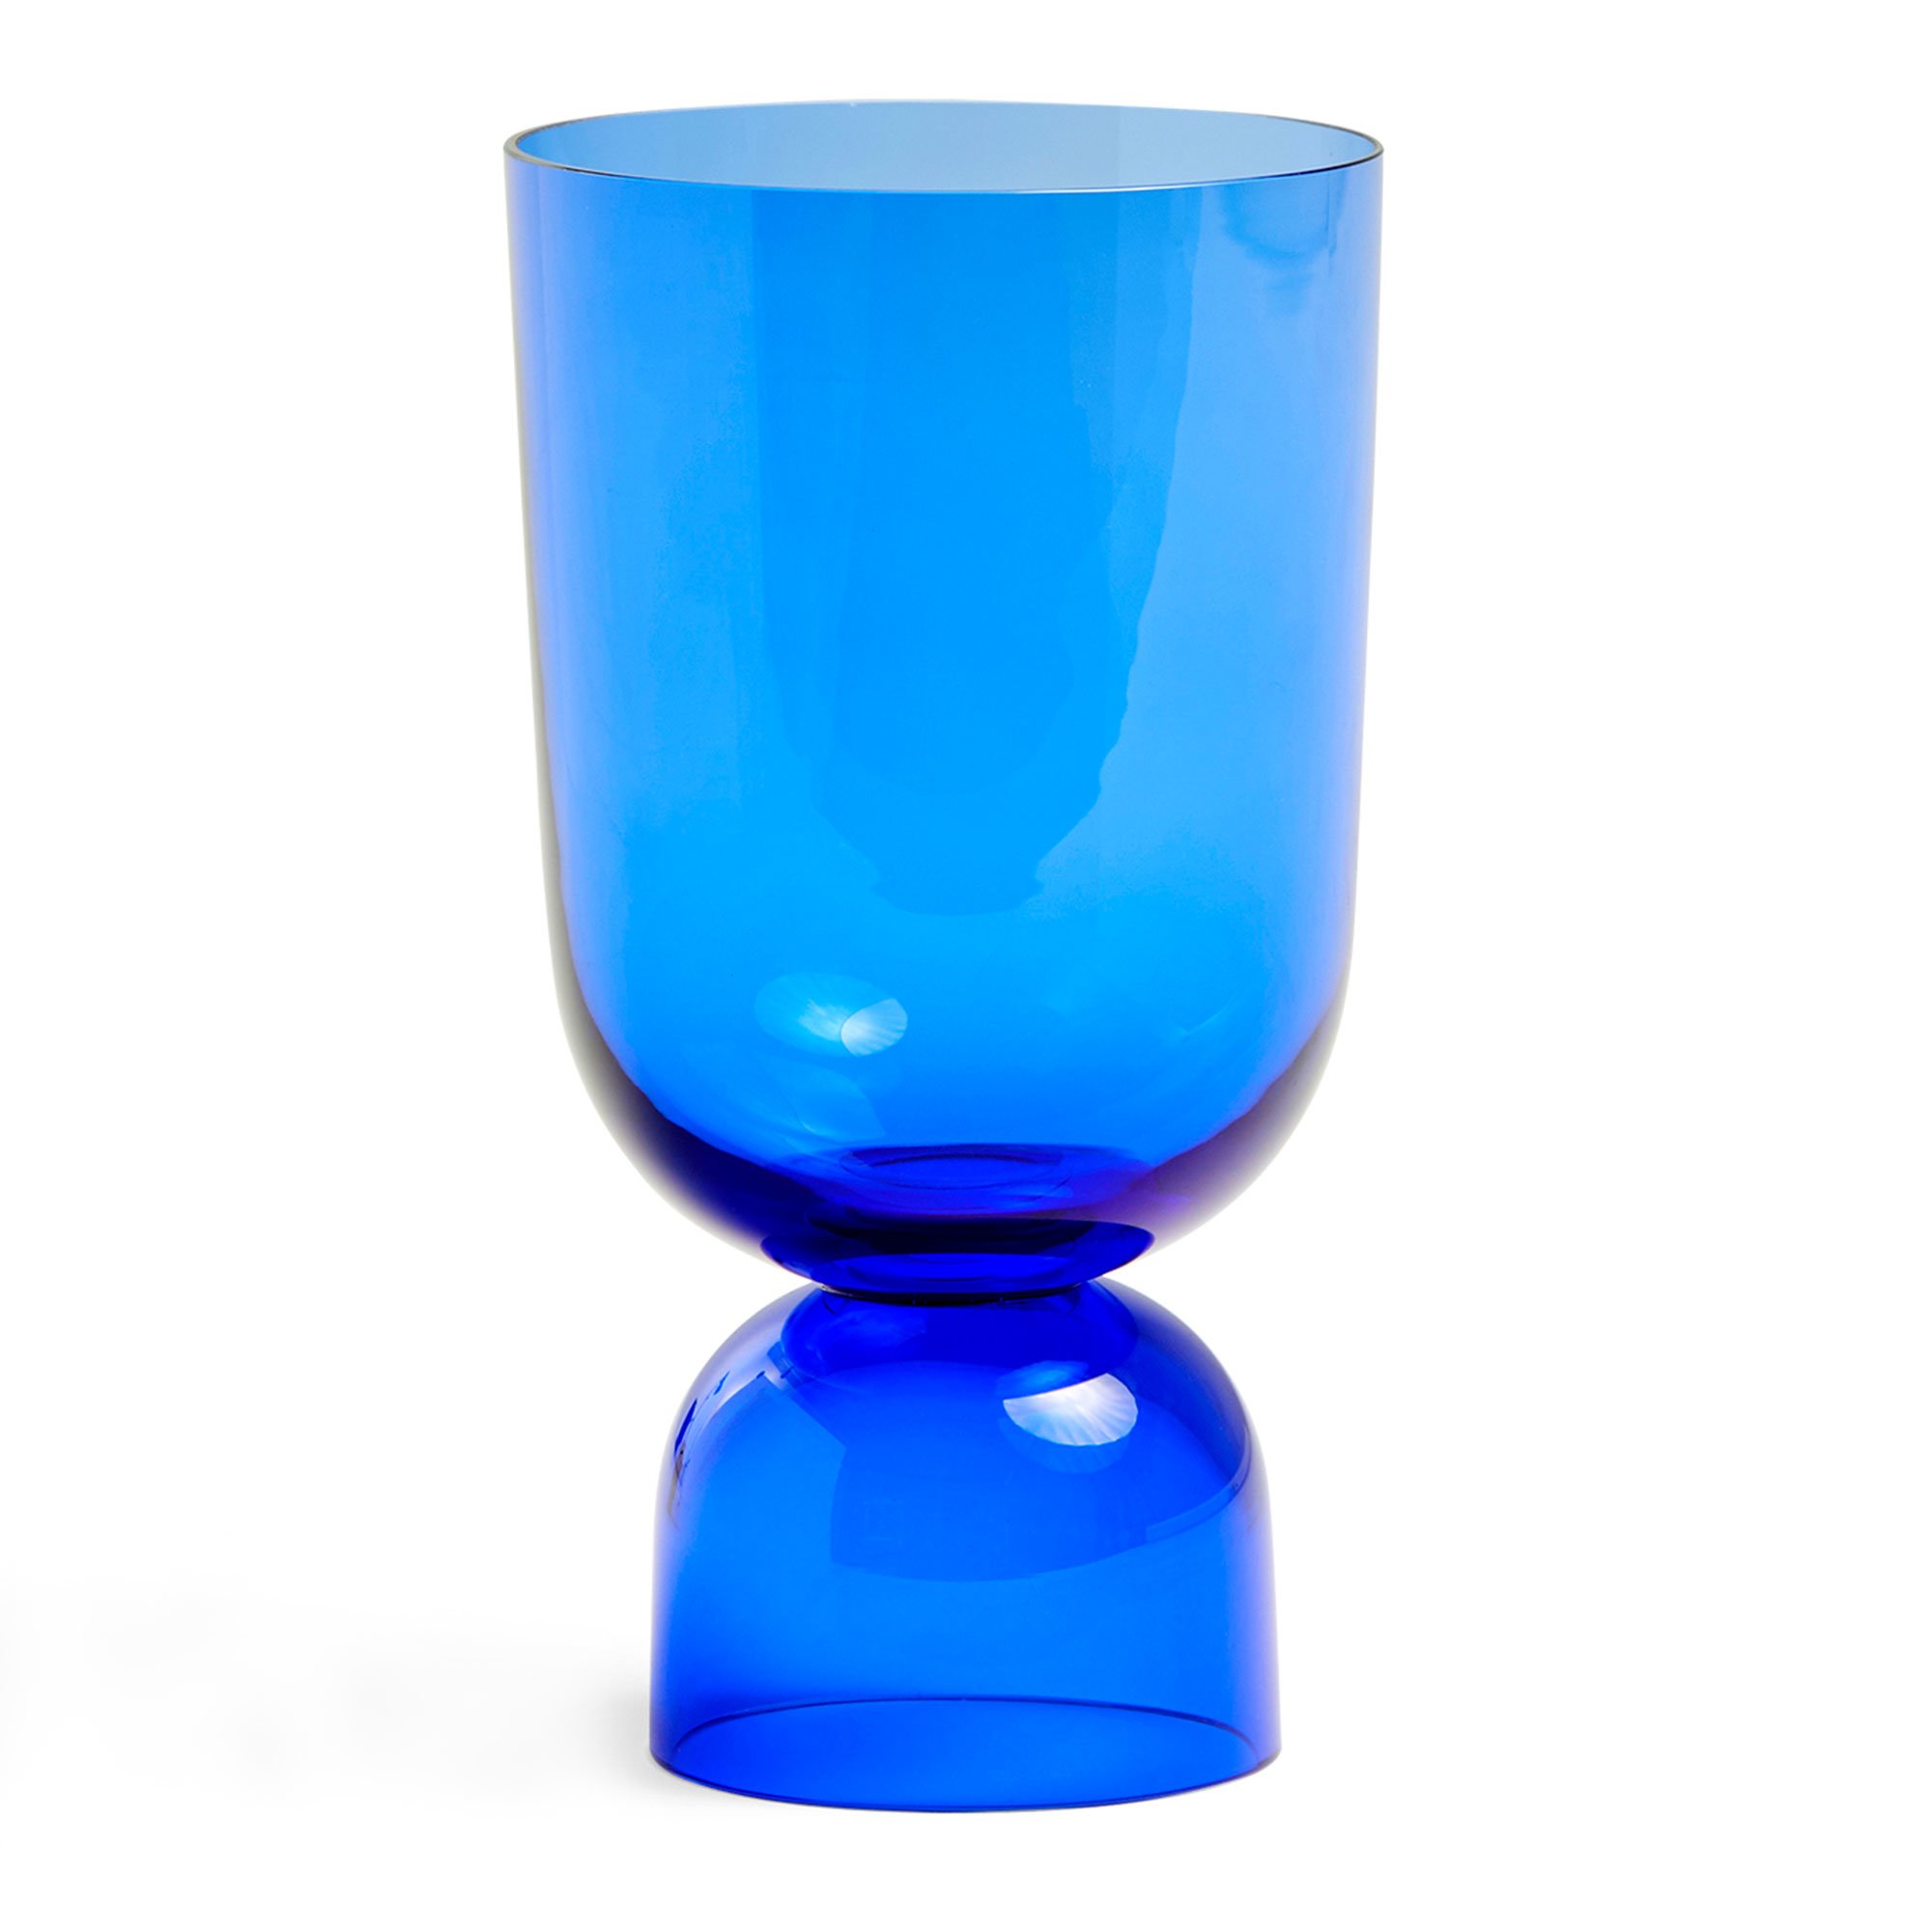 HAY Bottoms Up vase electric blue